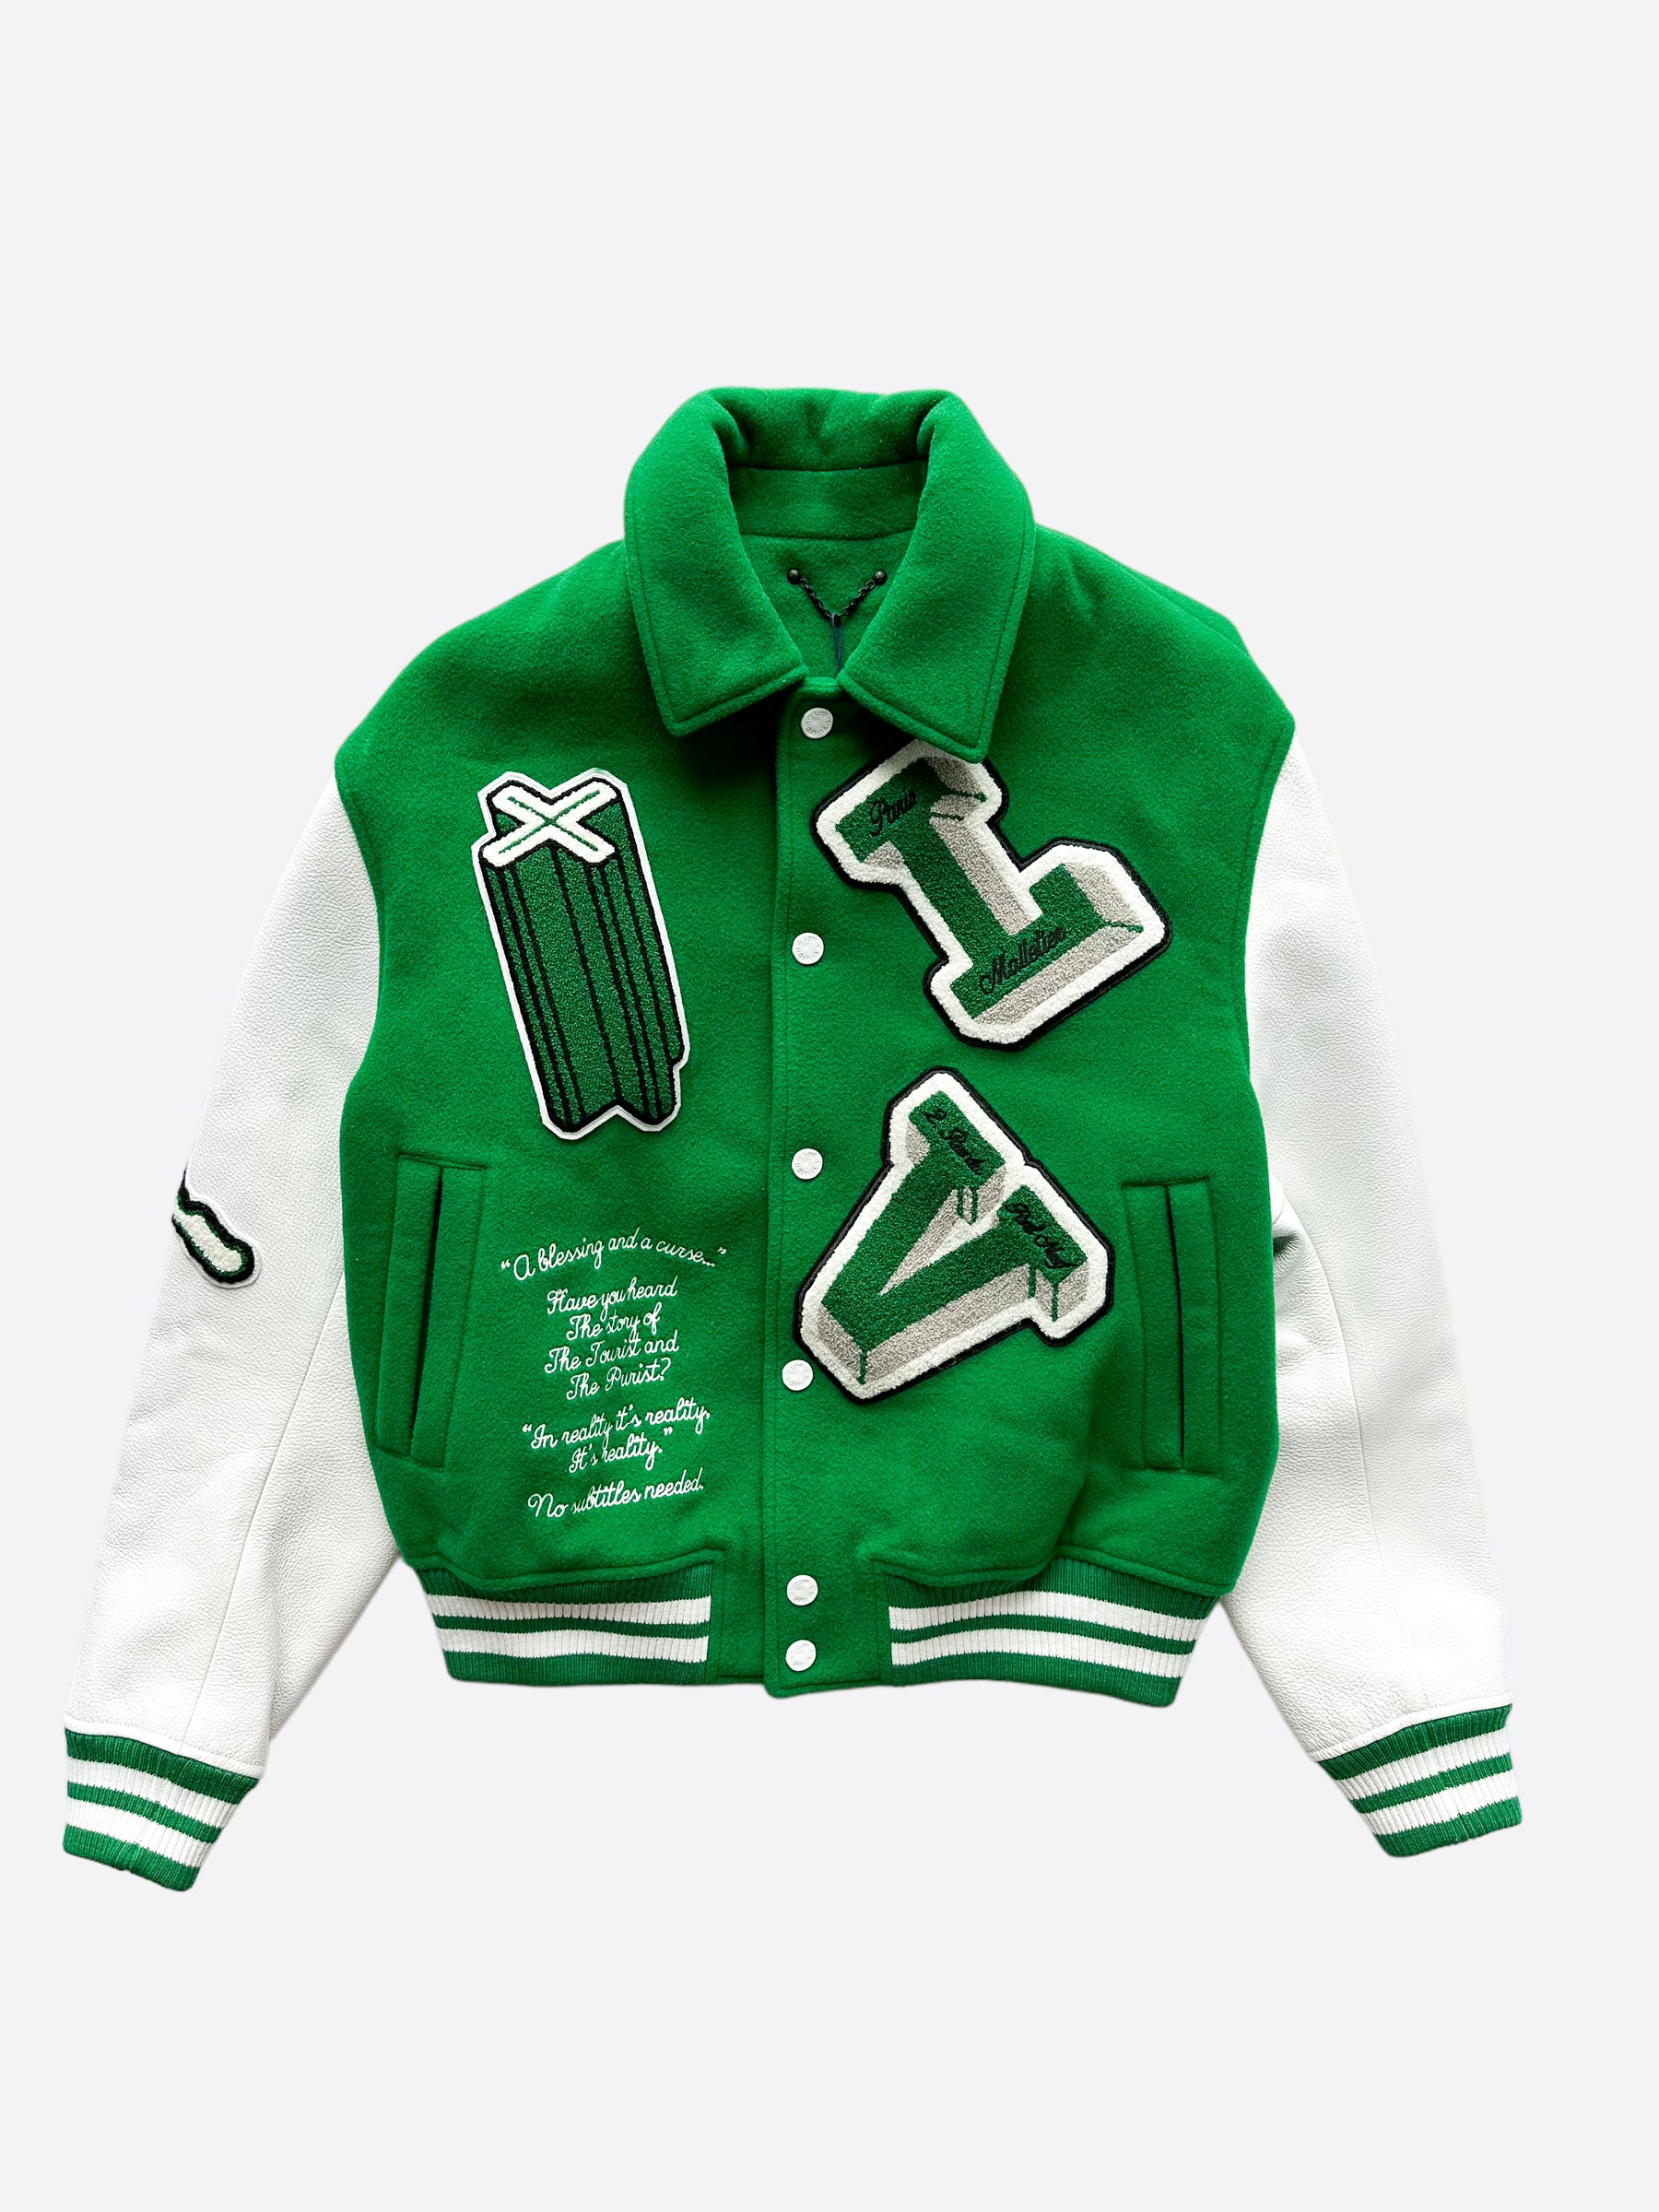 green and white louis vuitton jacket